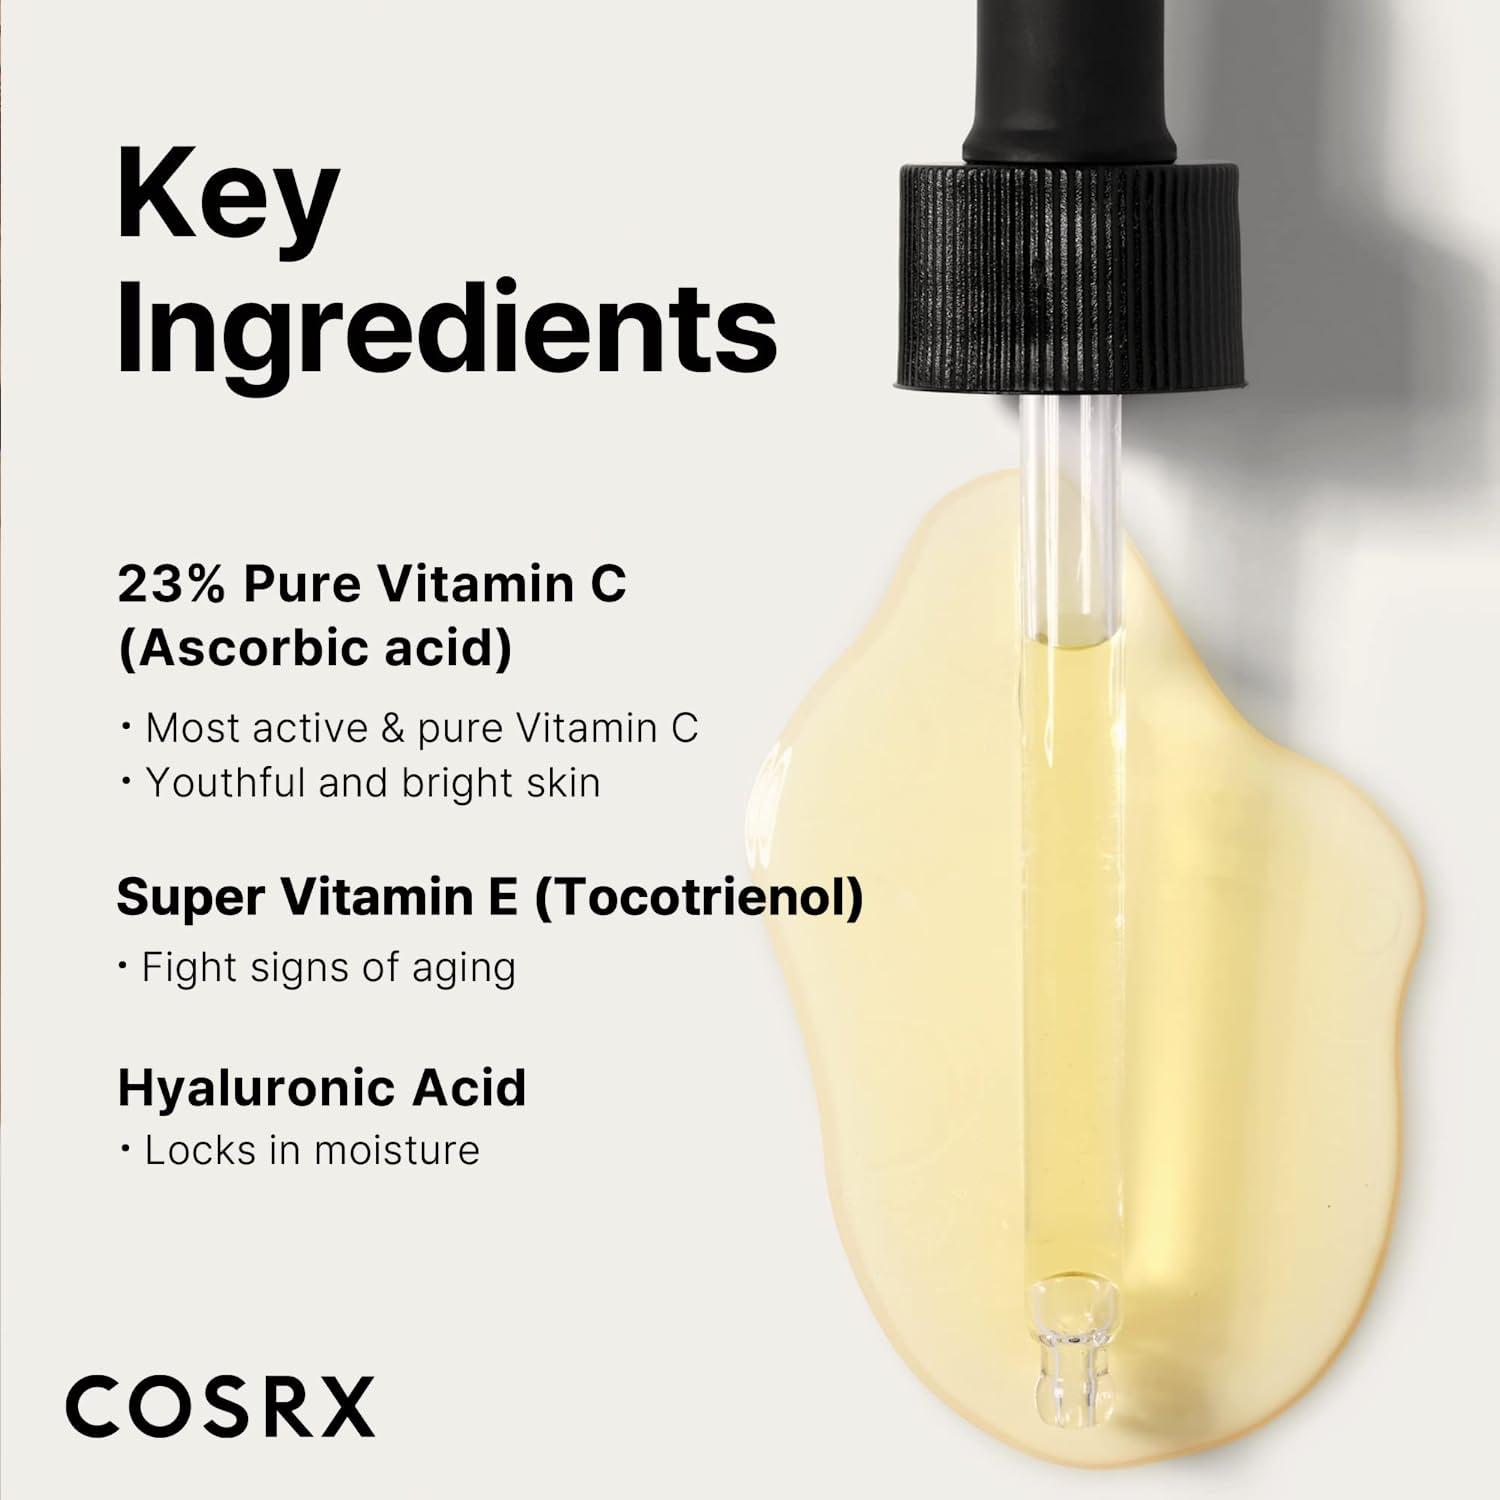 Серум за лице с Витамин Ц Cosrx The Vitamin C 23 Serum, 20 ml